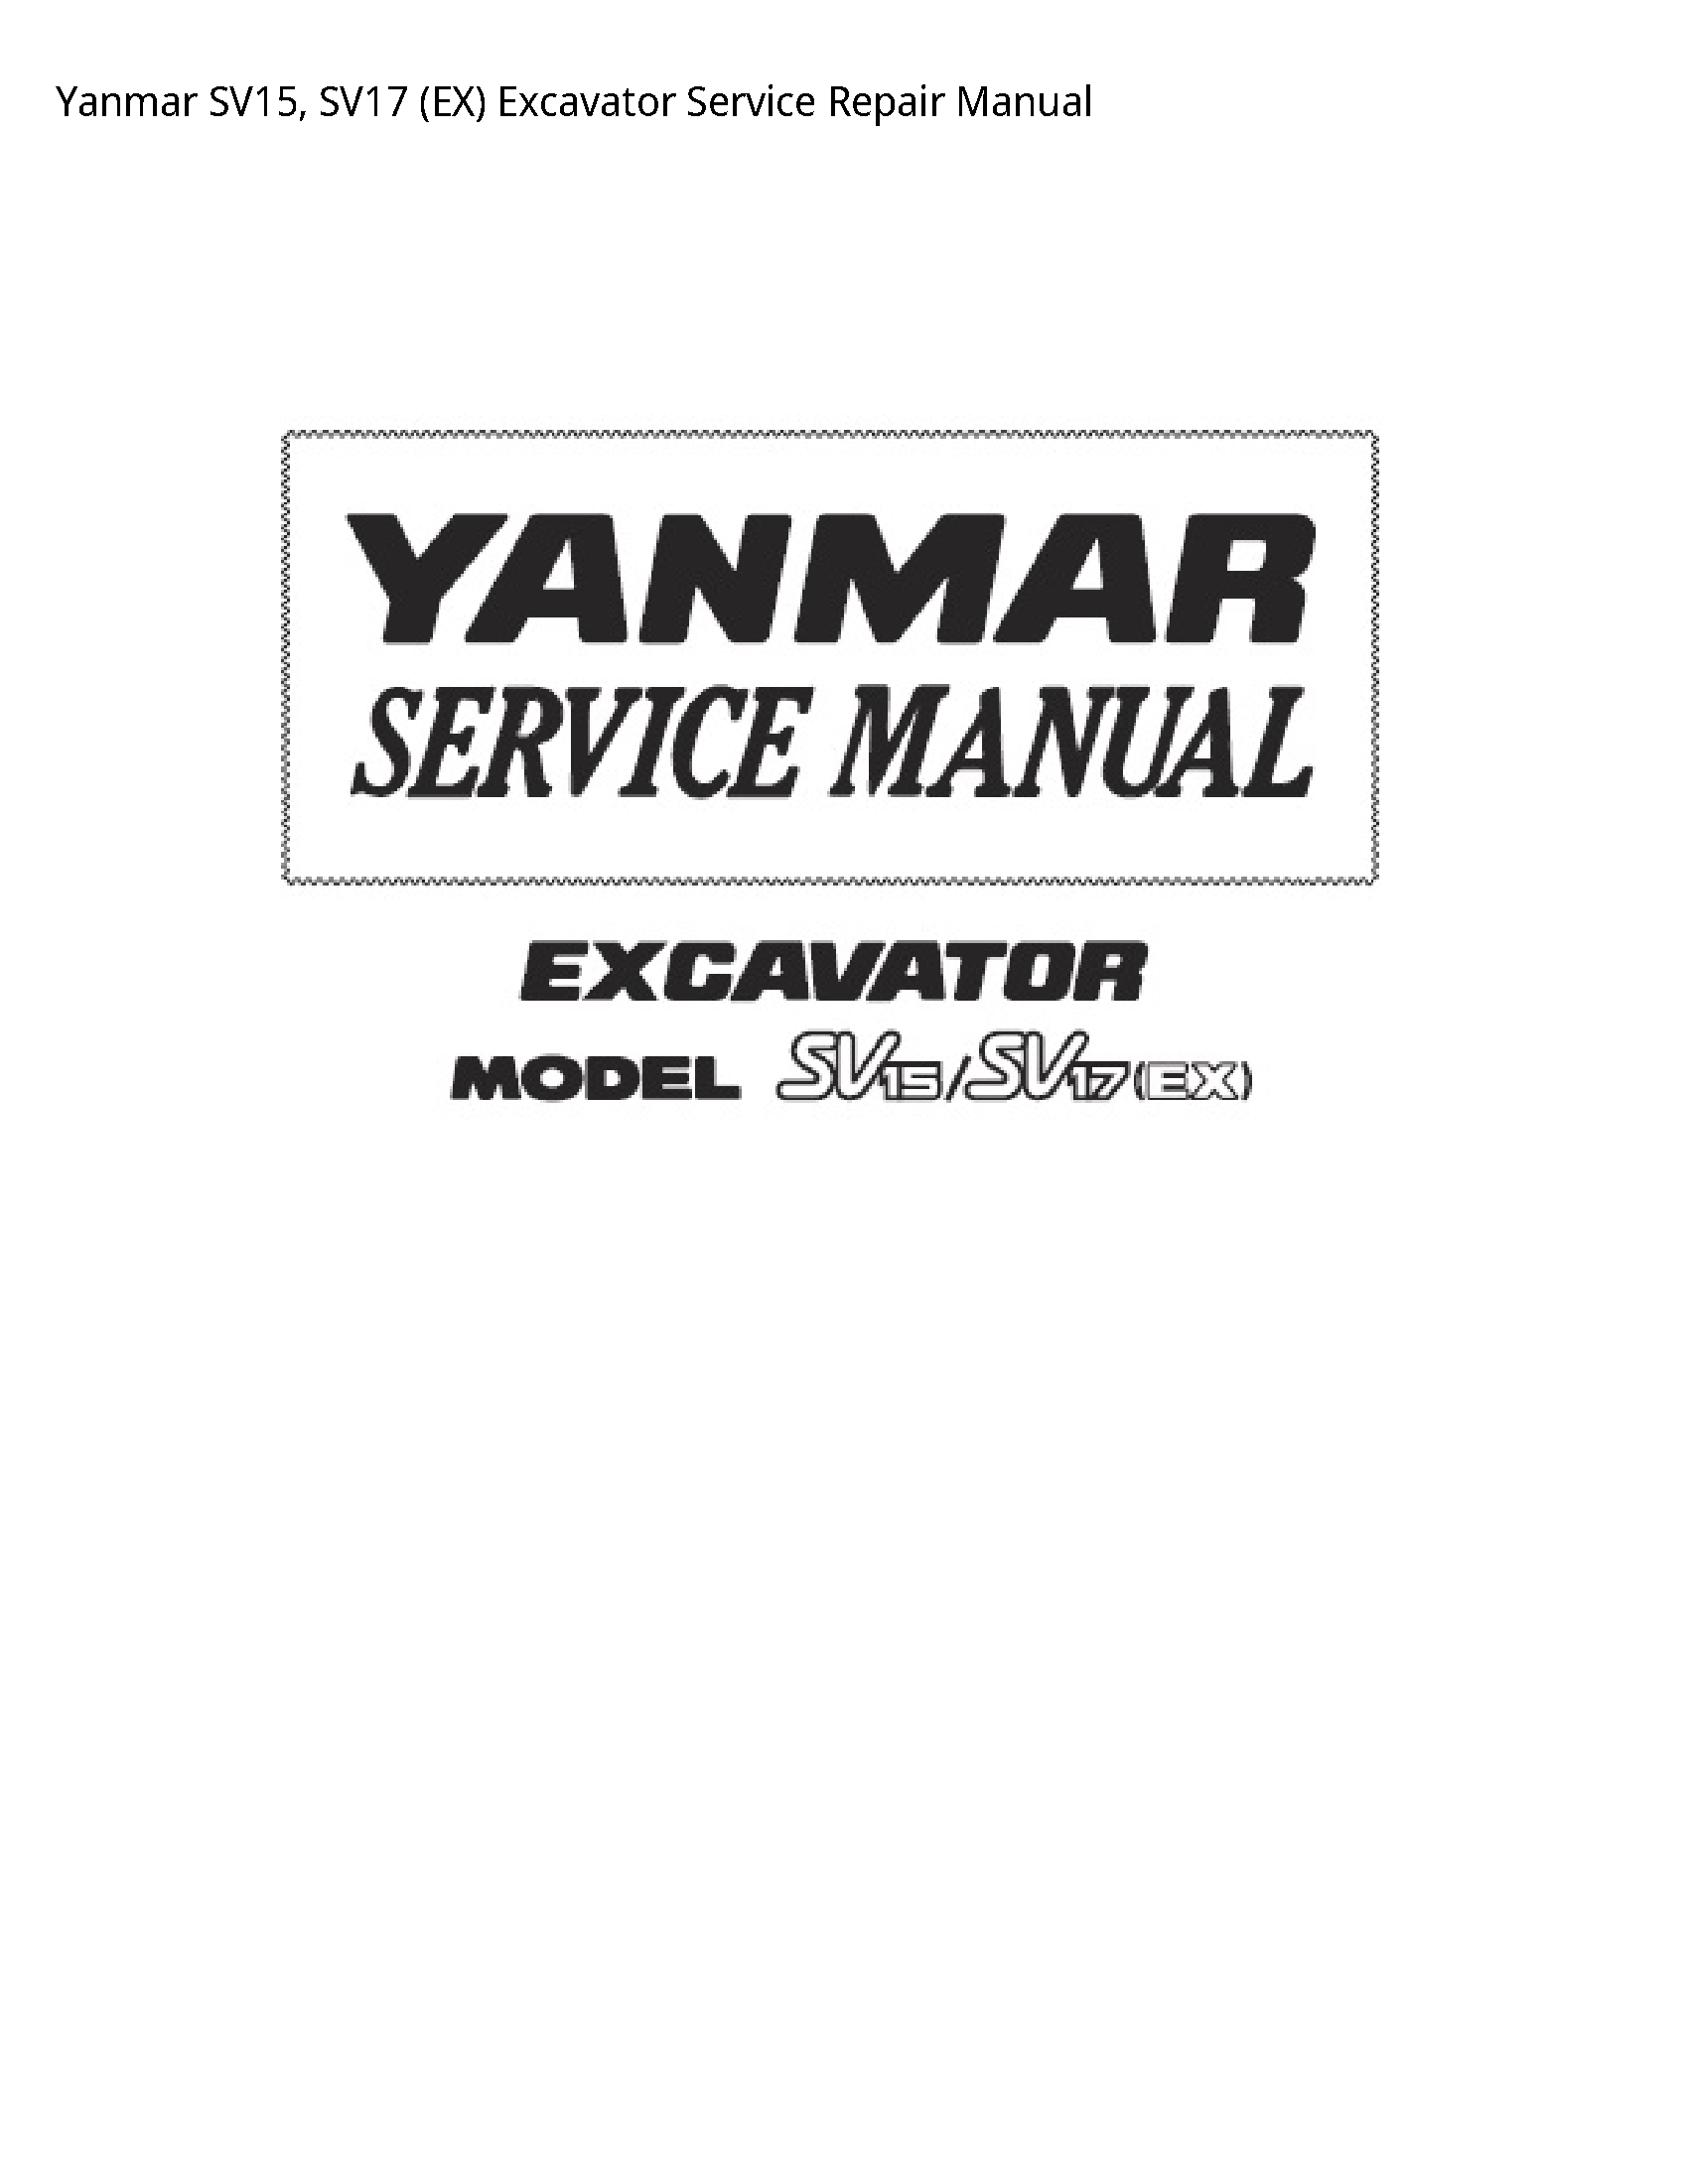 Yanmar SV15 (EX) Excavator manual